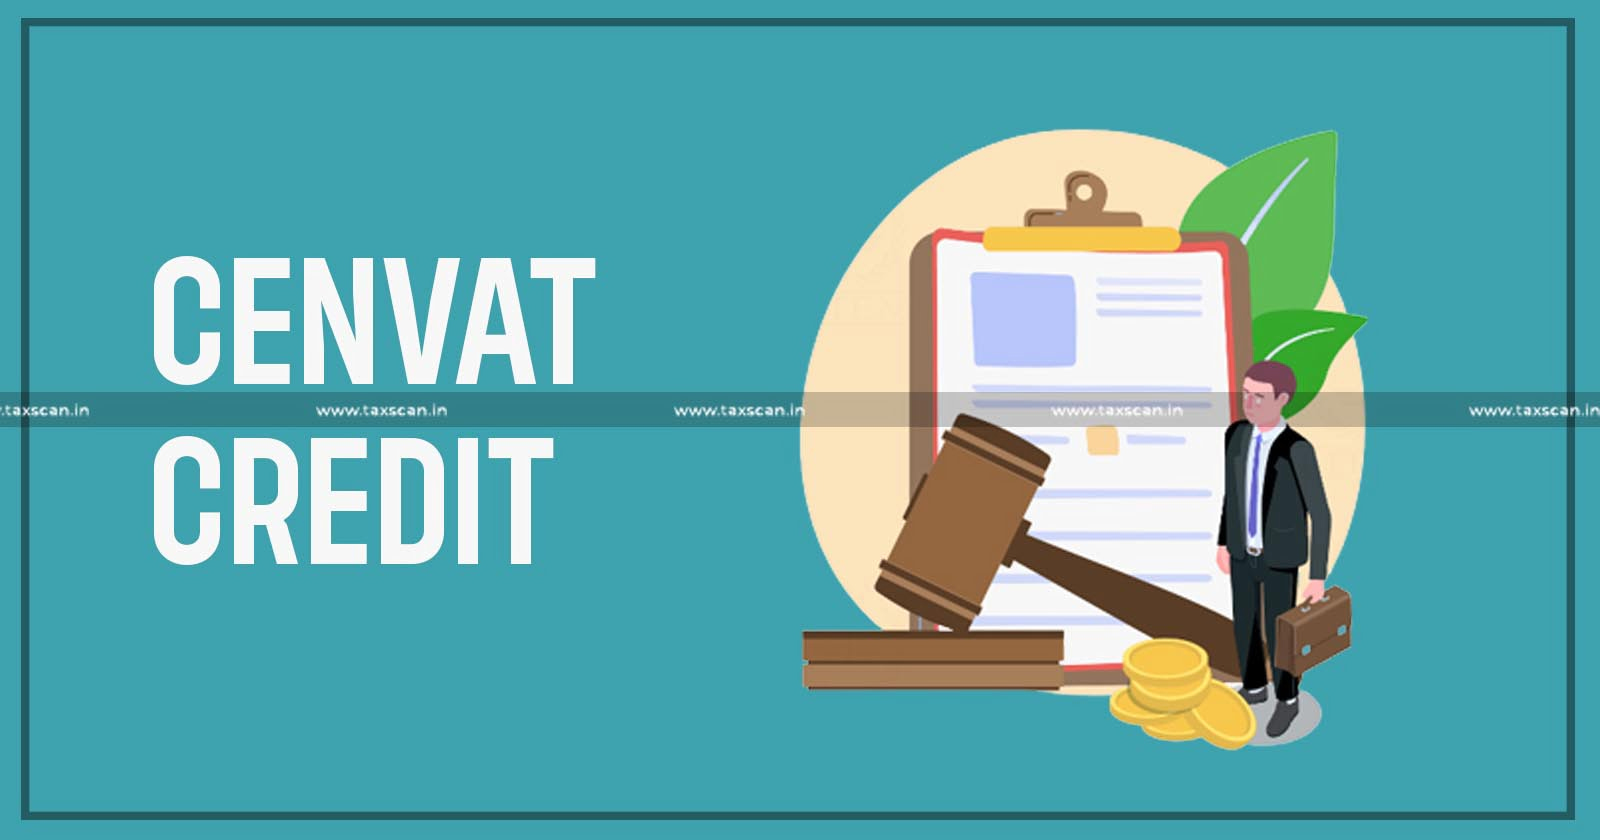 CESTAT - CESTAT Allahabad - Cenvat Credit - CESTAT on interest recovery - CENVAT credit interest recovery - taxscan